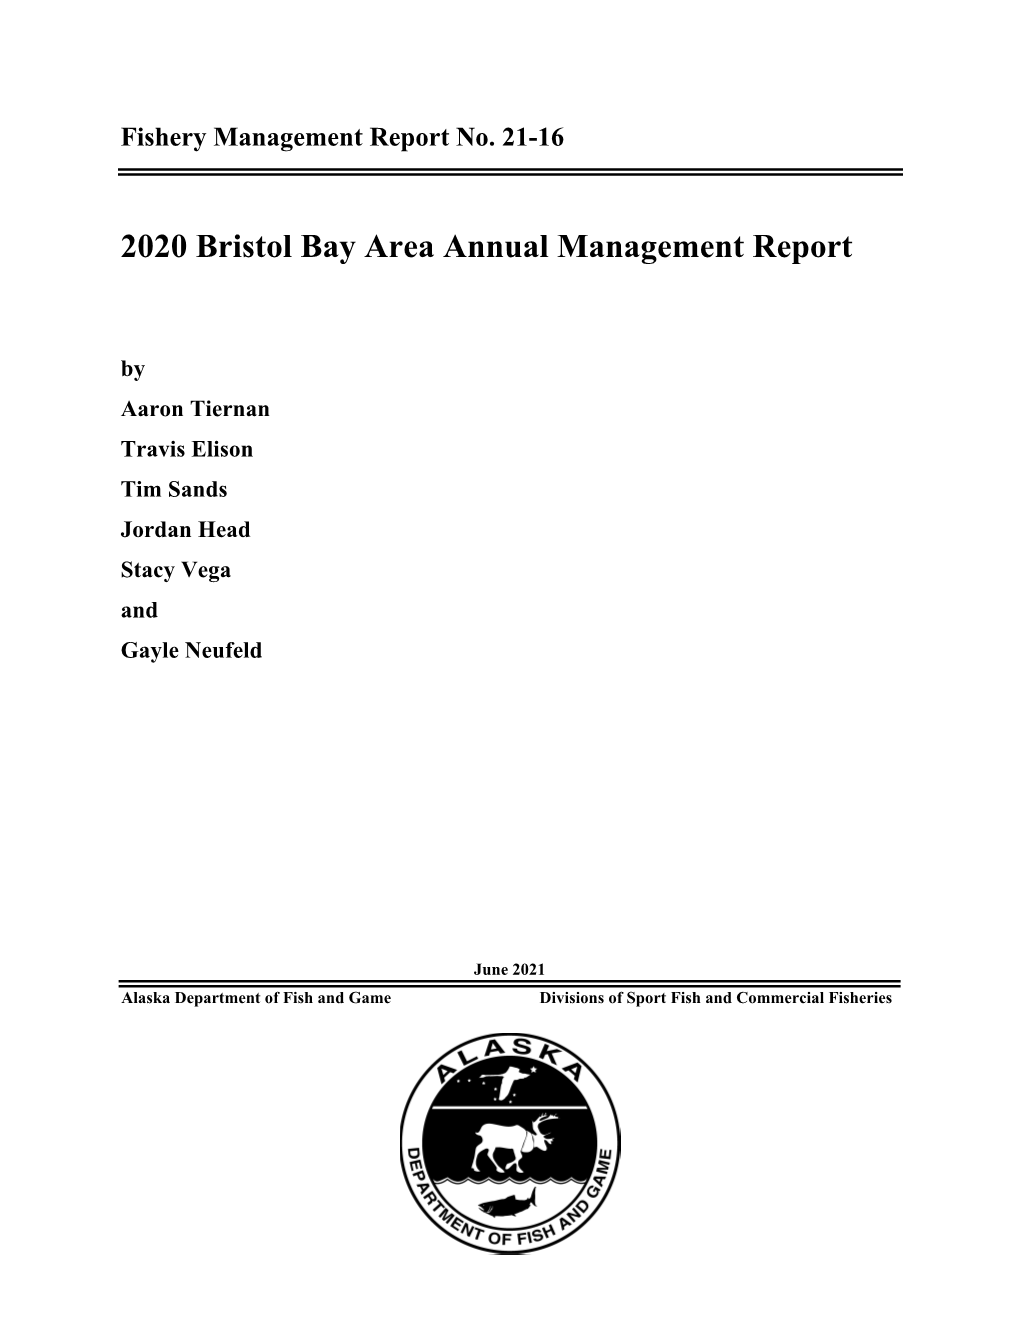 2020 Bristol Bay Area Annual Management Report